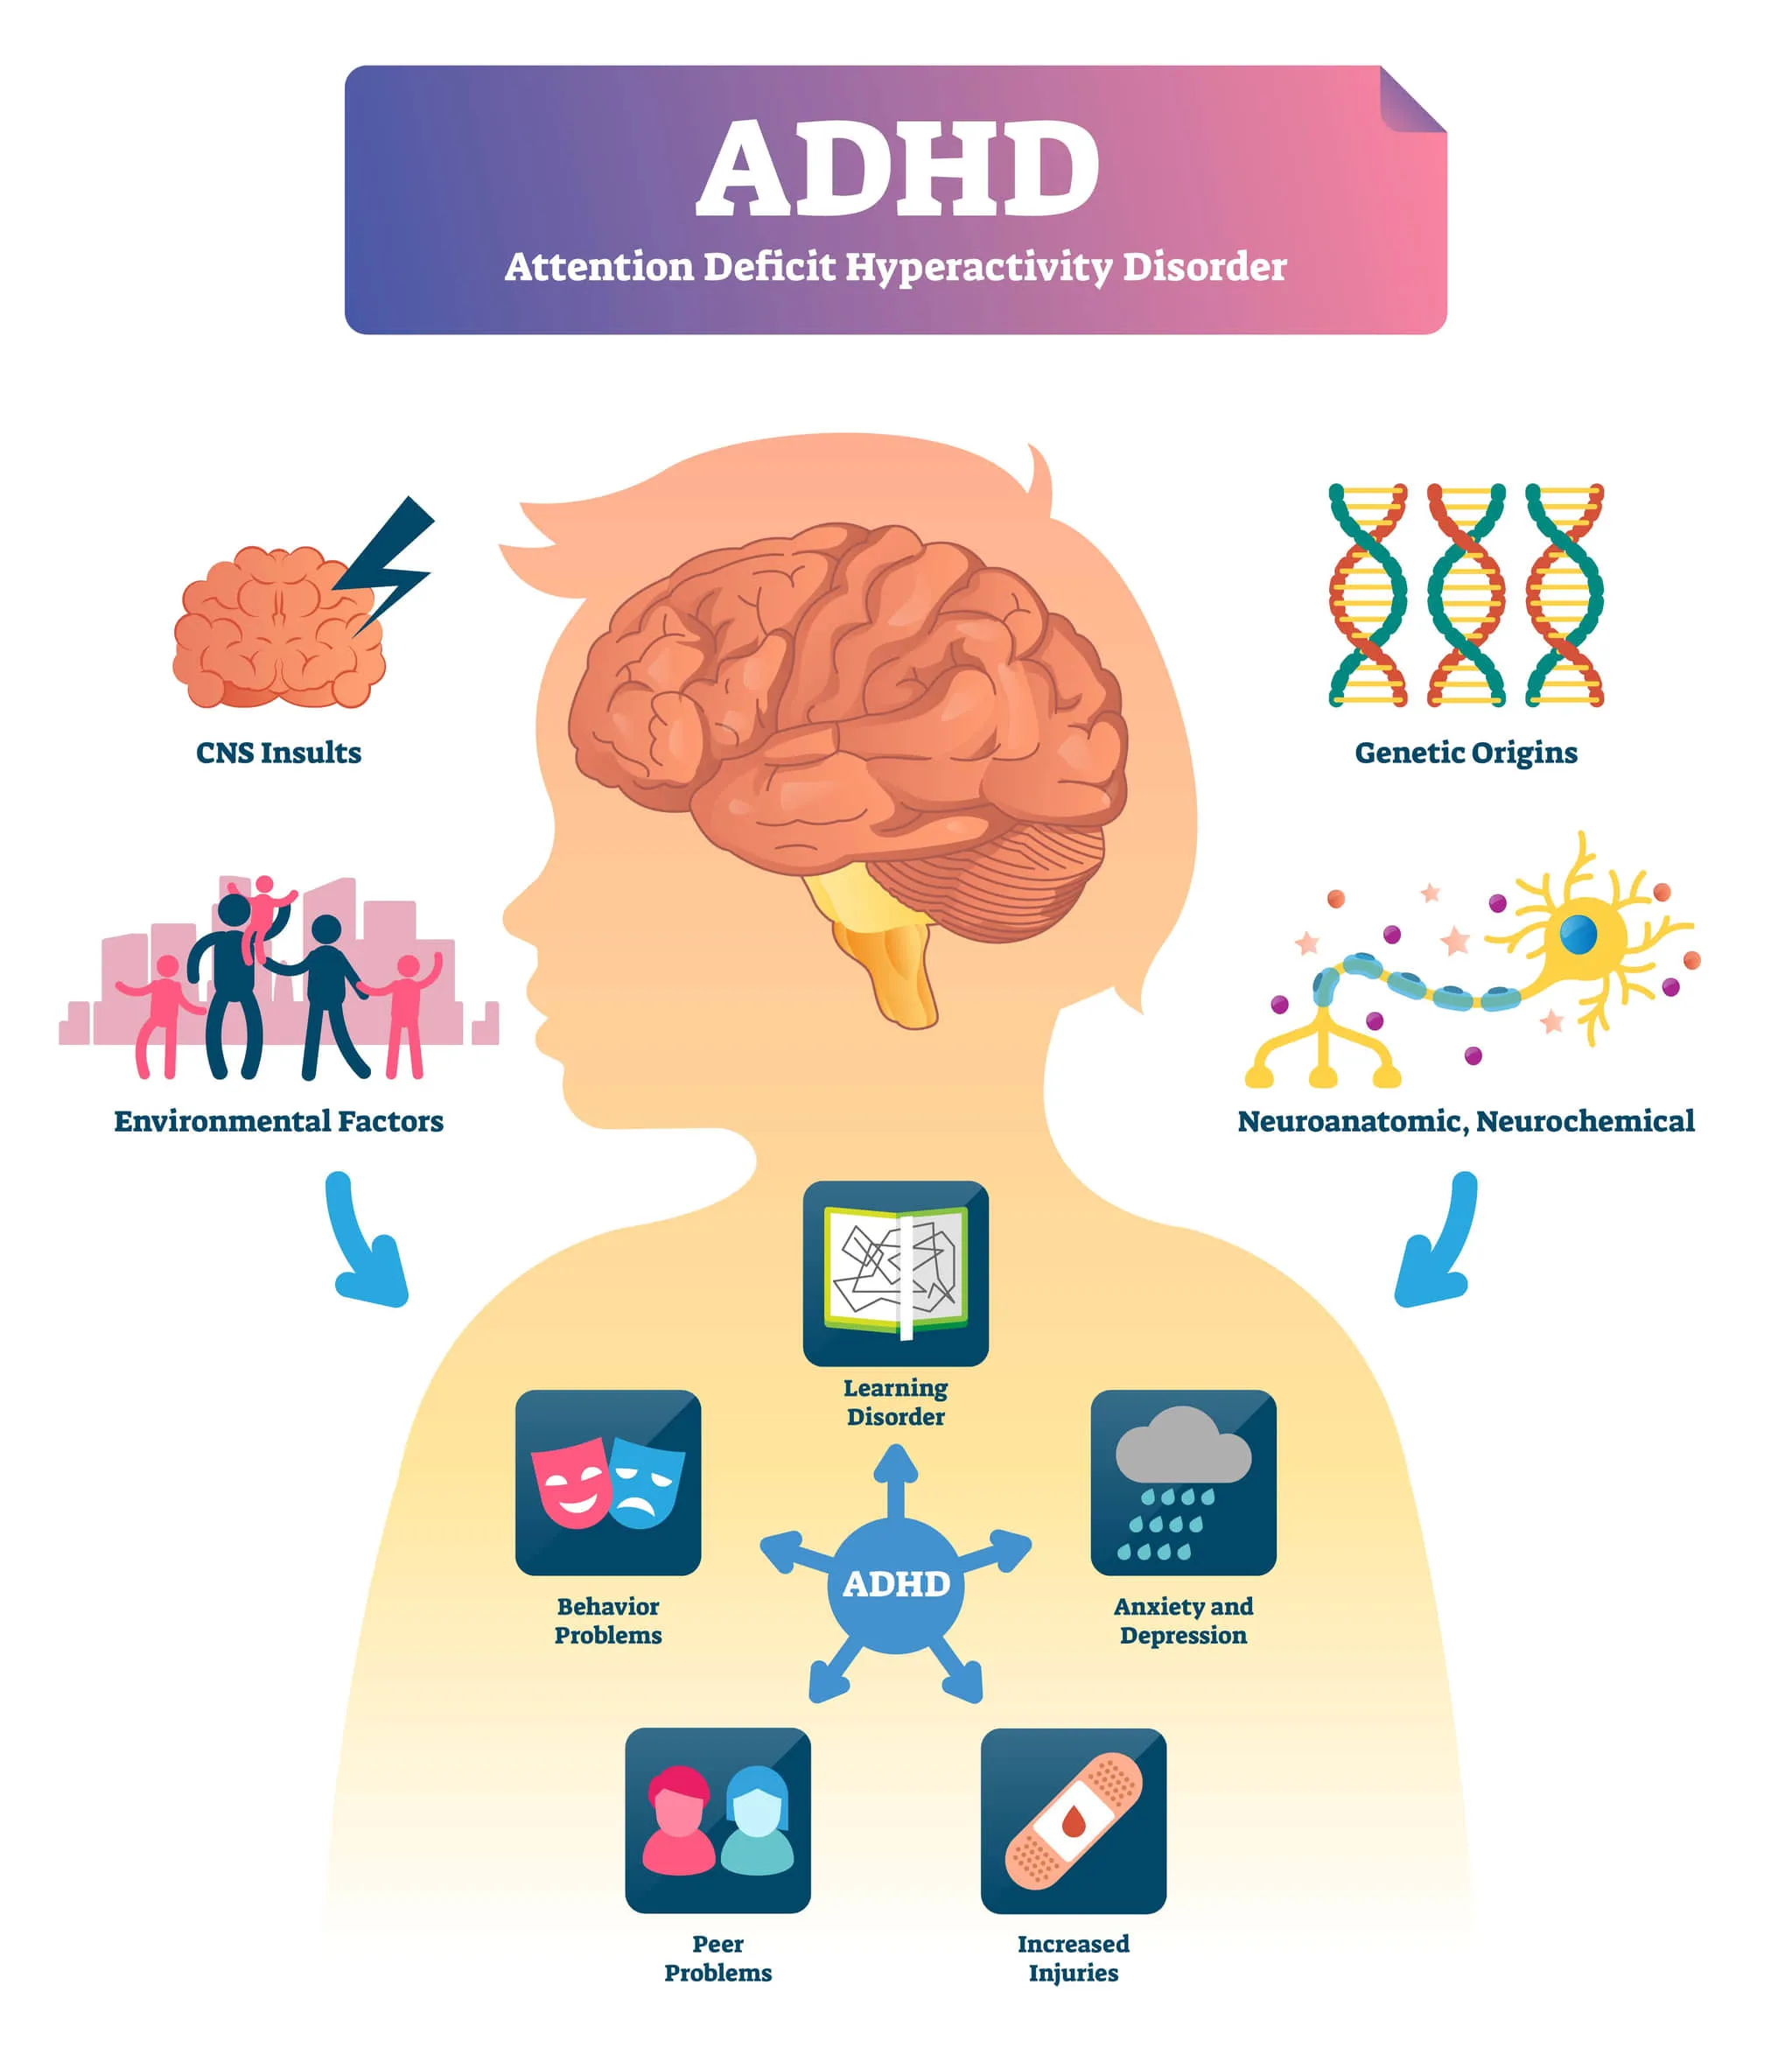 ADHDは子どもに遺伝する？確率や5つの特徴、検査・治療まで解説